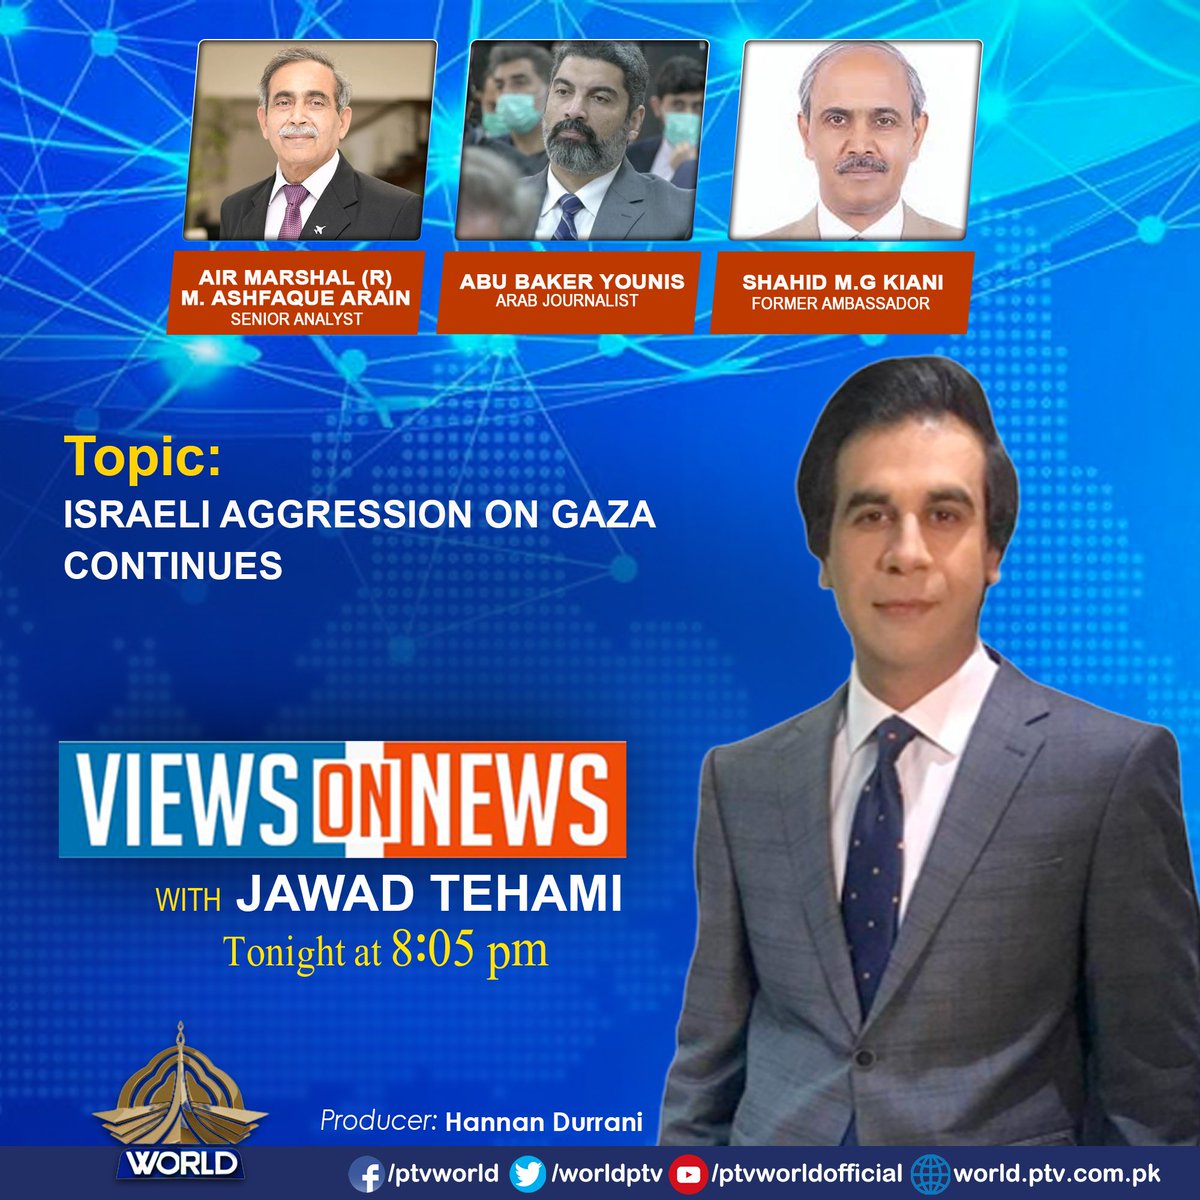 Watch Views on News Tonight at 08:05 only on PTV WORLD @JawadTehami @HannanDurrani